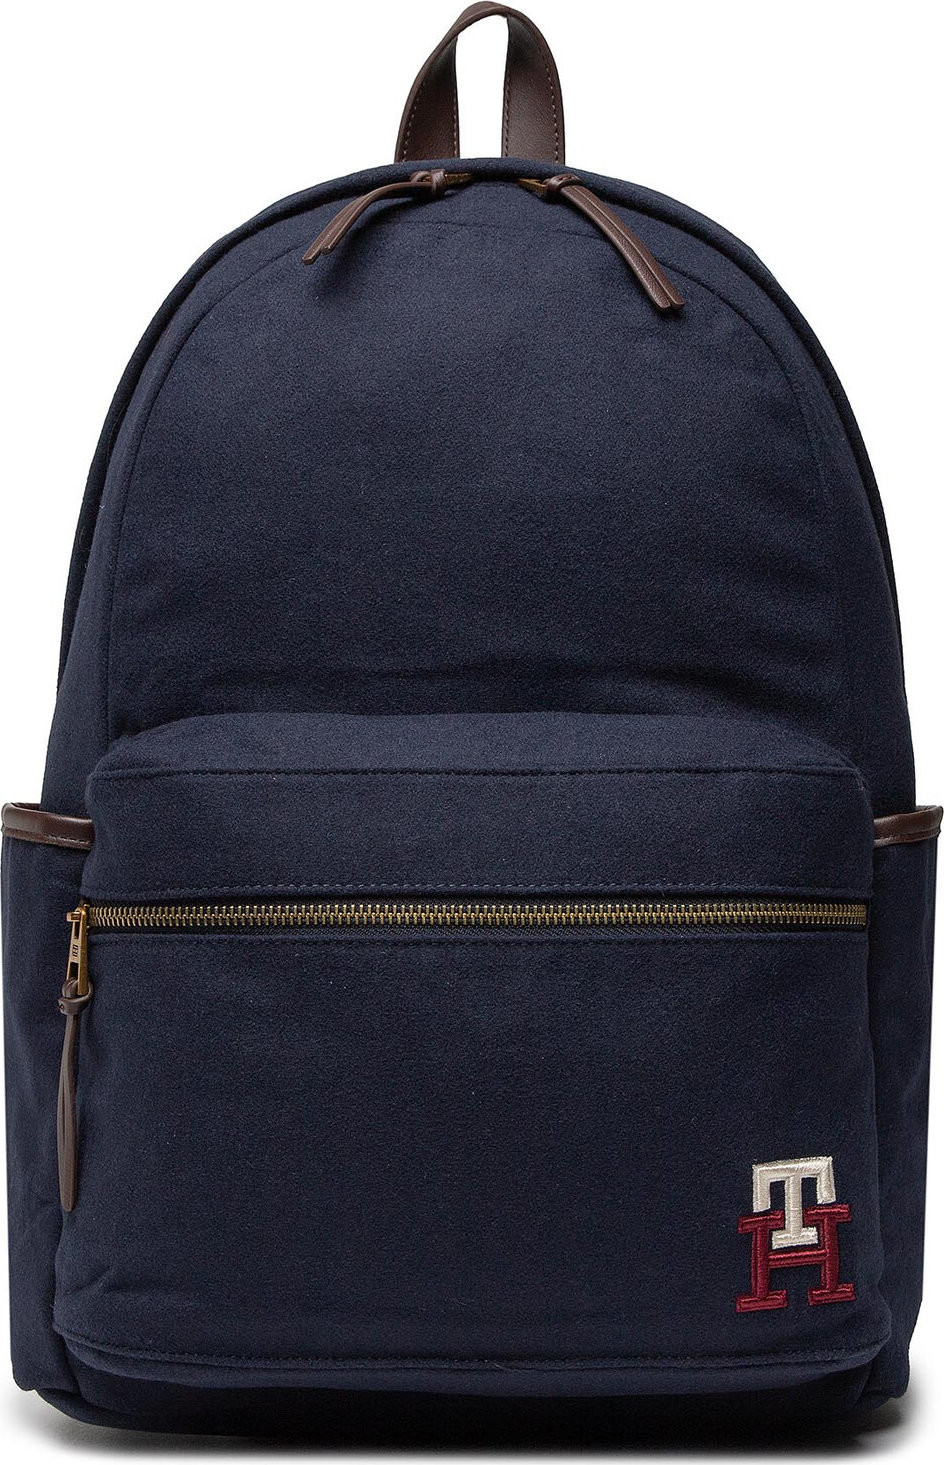 Batoh Tommy Hilfiger New Prep Backpack AM0AM10290 DW6